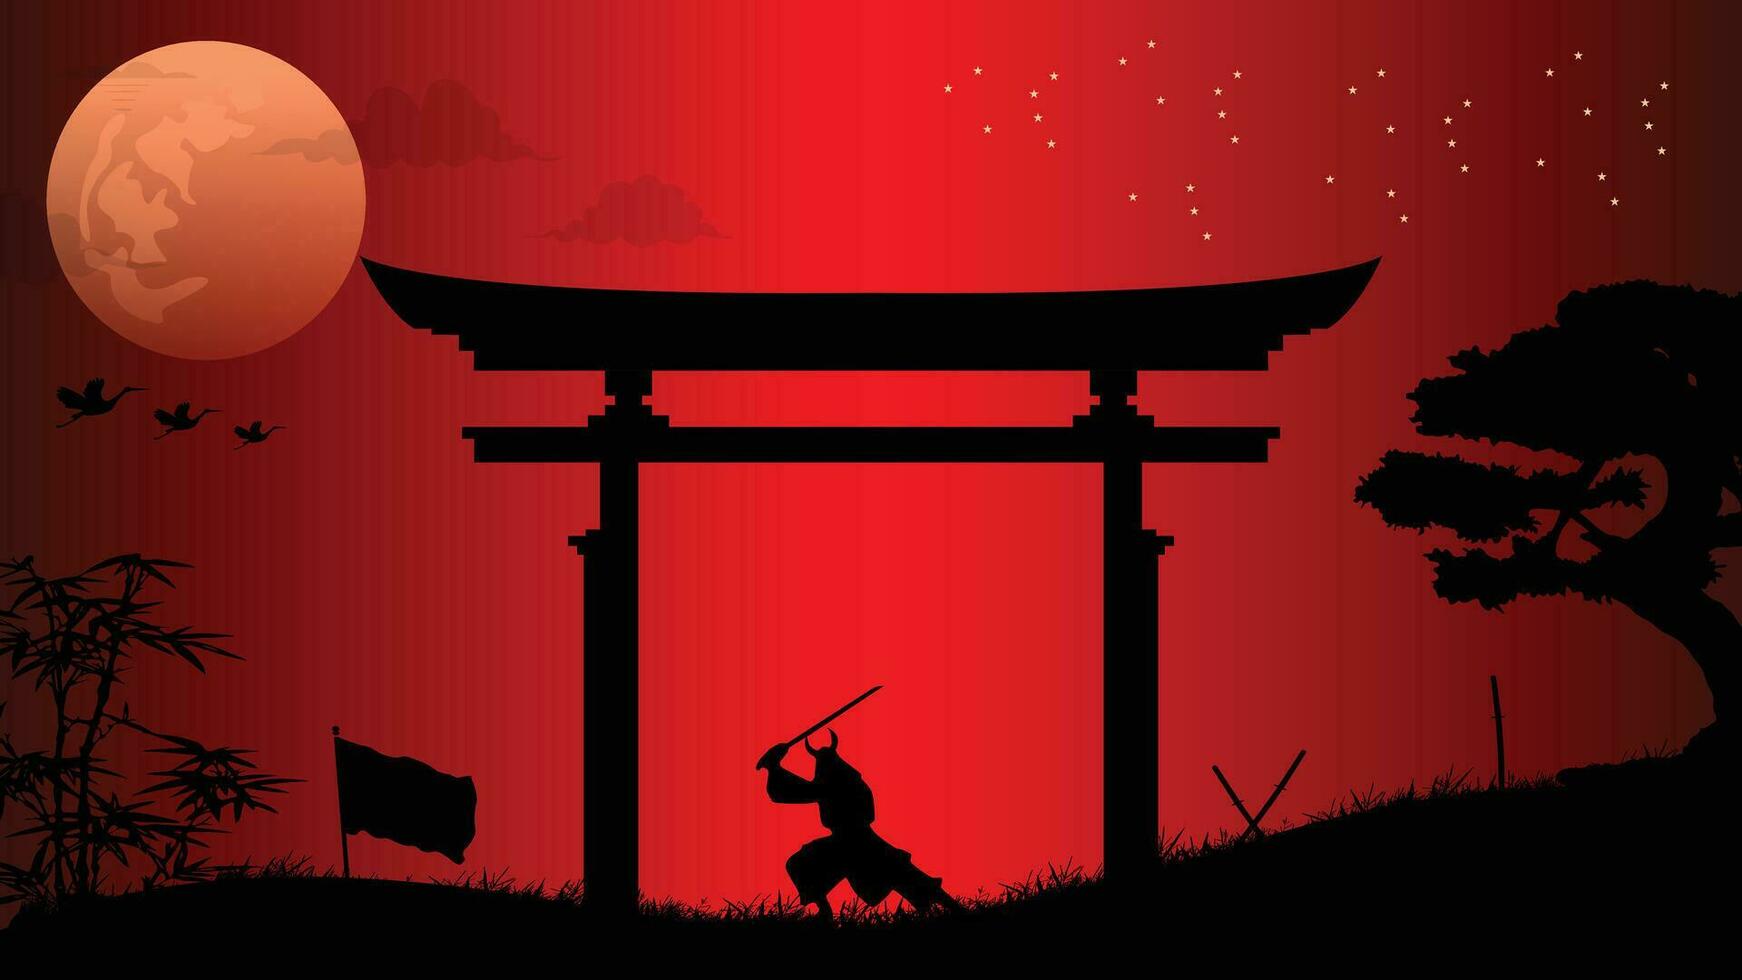 ilustración vector gráfico de ninjas, asesino, samurai formación a noche en un lleno Luna. Perfecto para fondo de pantalla, póster, etc.